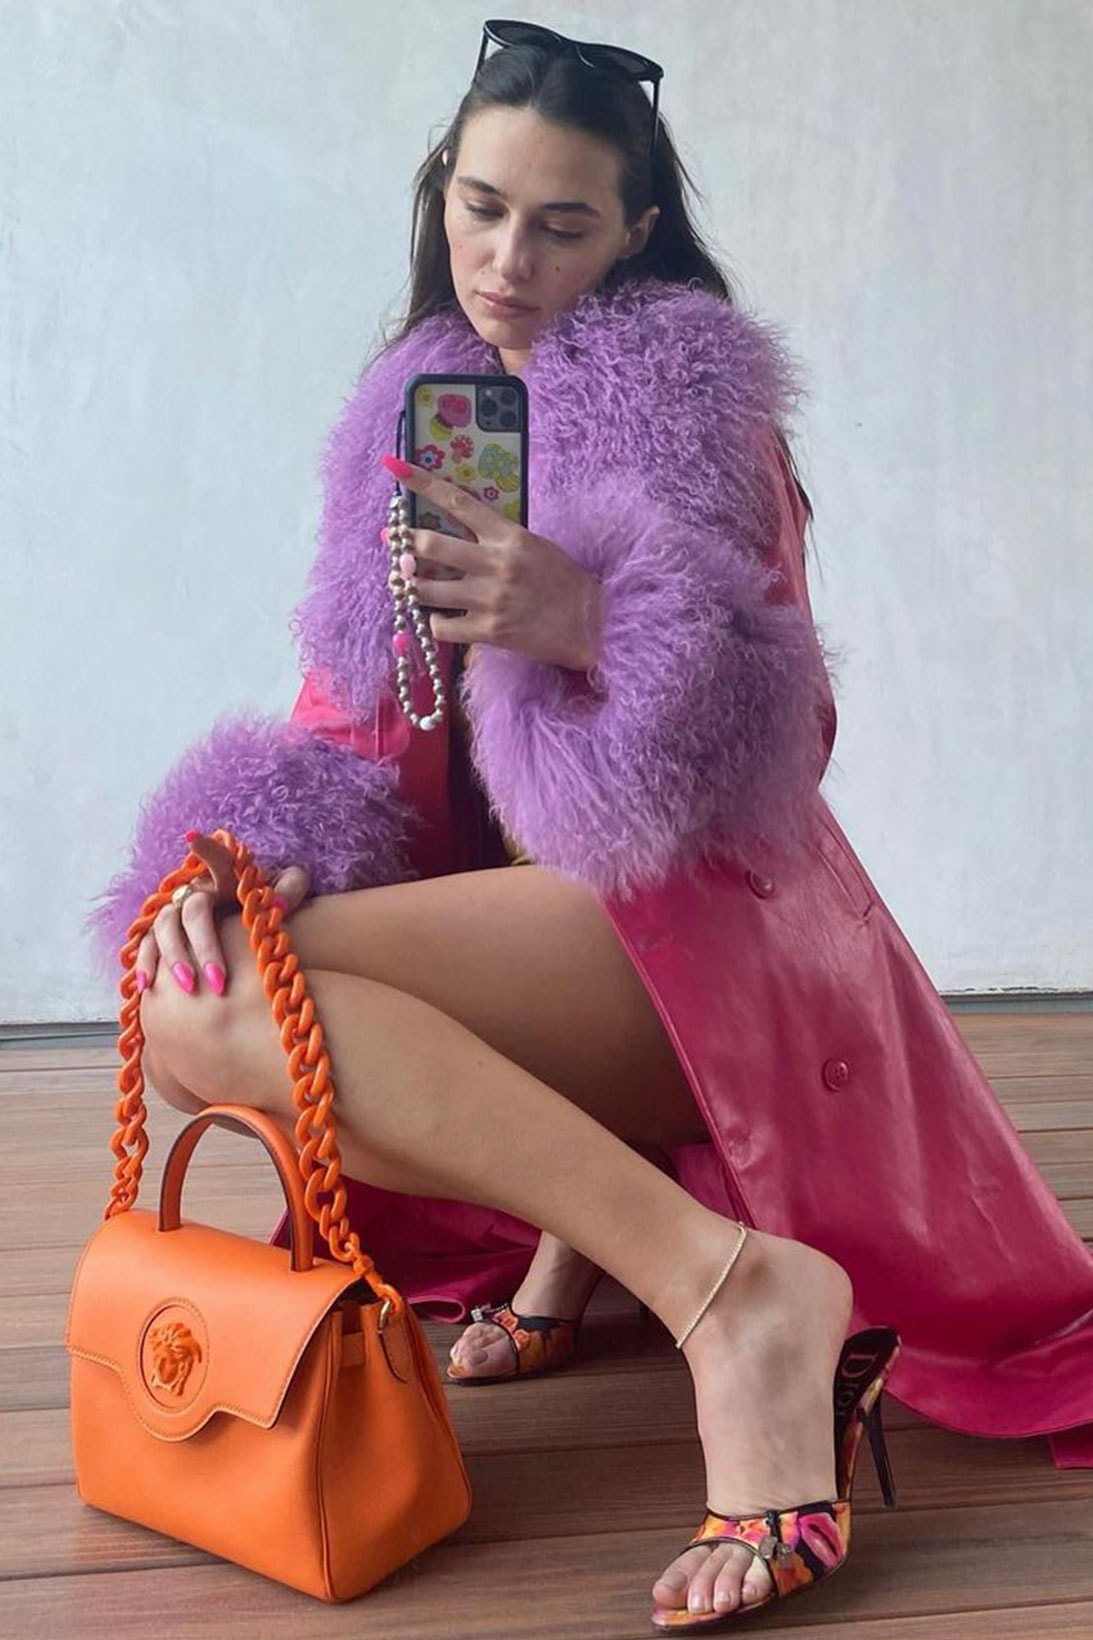 Devon Lee Carlson Mirror Selfie Phone Beaded Strap Case Outfit Handbag